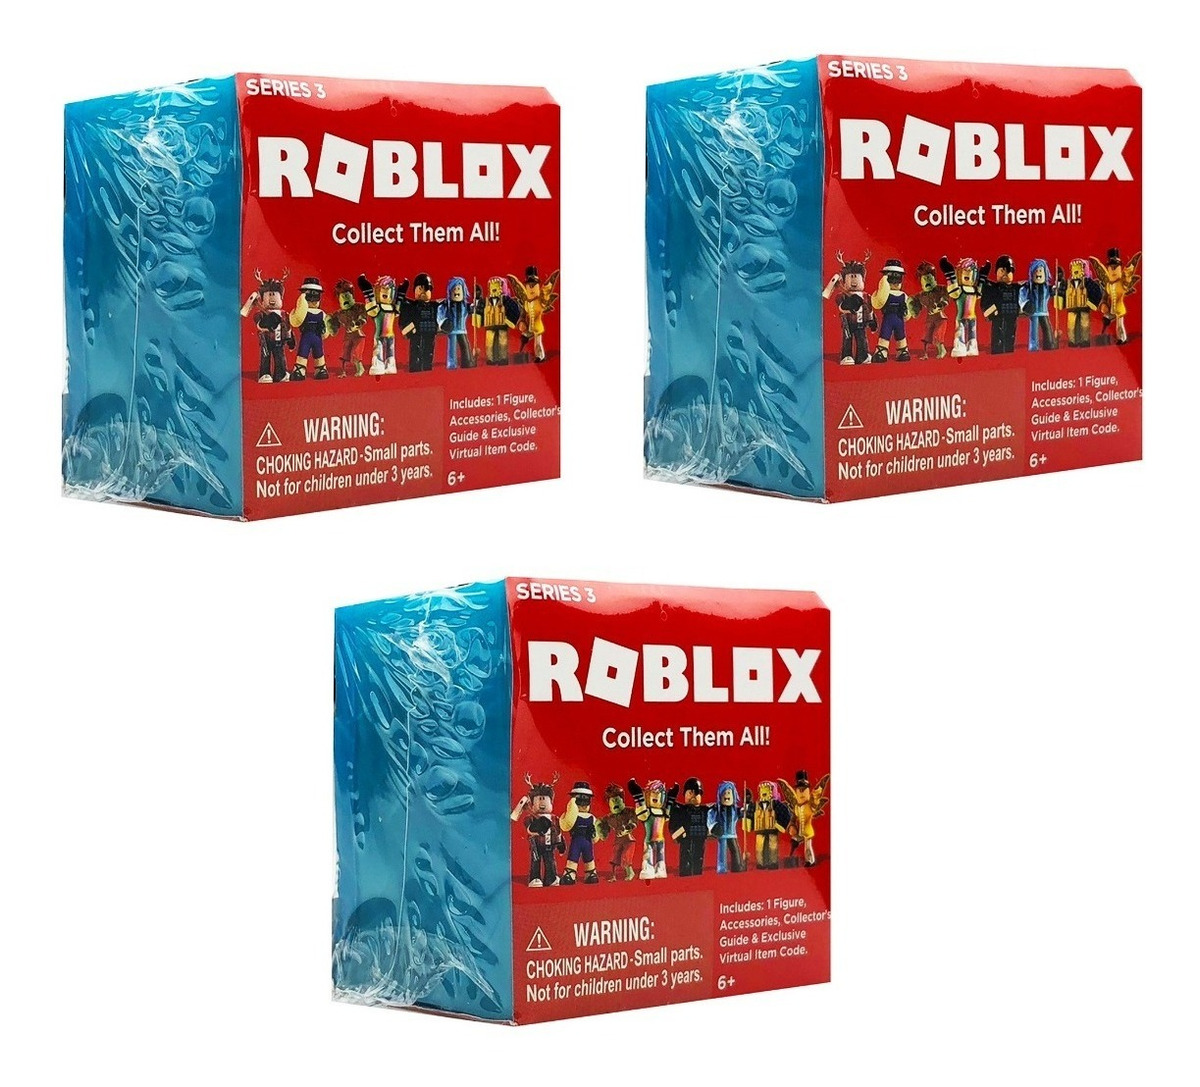 Kit C 3 Caixas Misteriosas Roblox Series 3 7 Cm Blind Bag - kit c 3 caixas misteriosas roblox series 3 7 cm blind bag